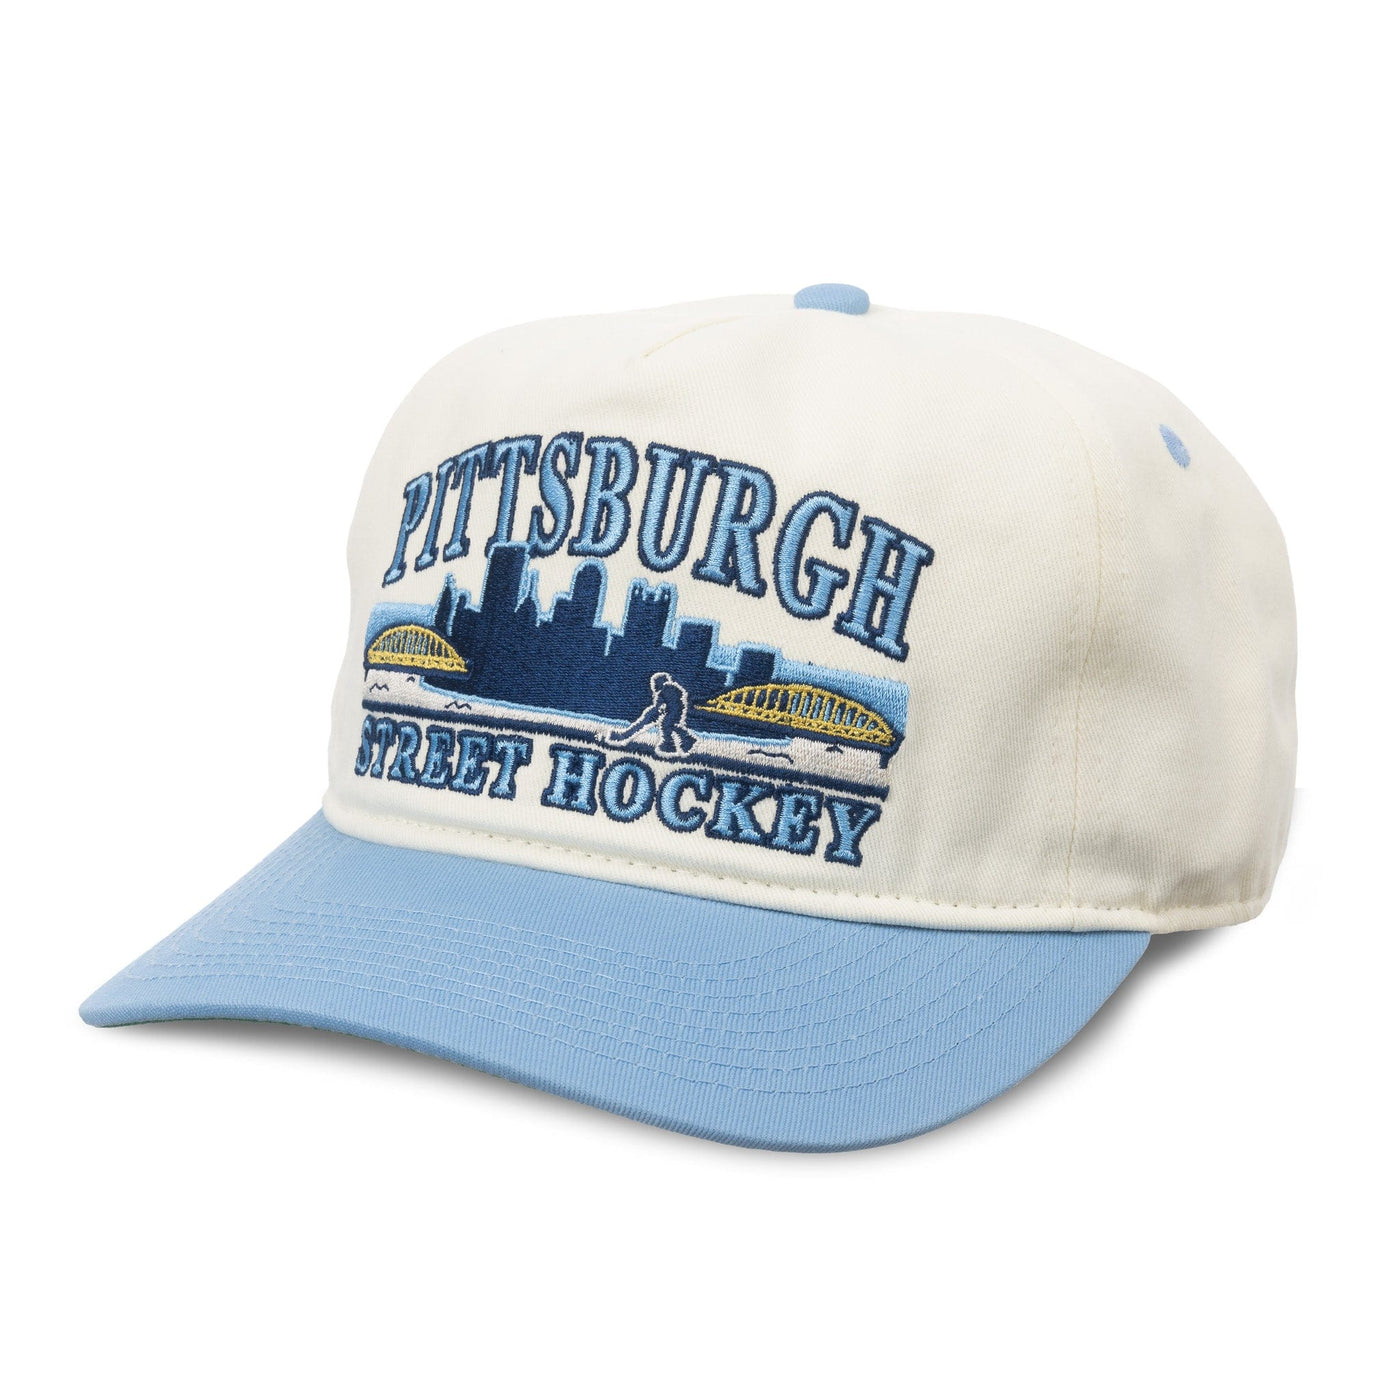 Celly Hockey Pittsburgh Street Hockey Snapback Hat - Cream - TheHockeyShop.com